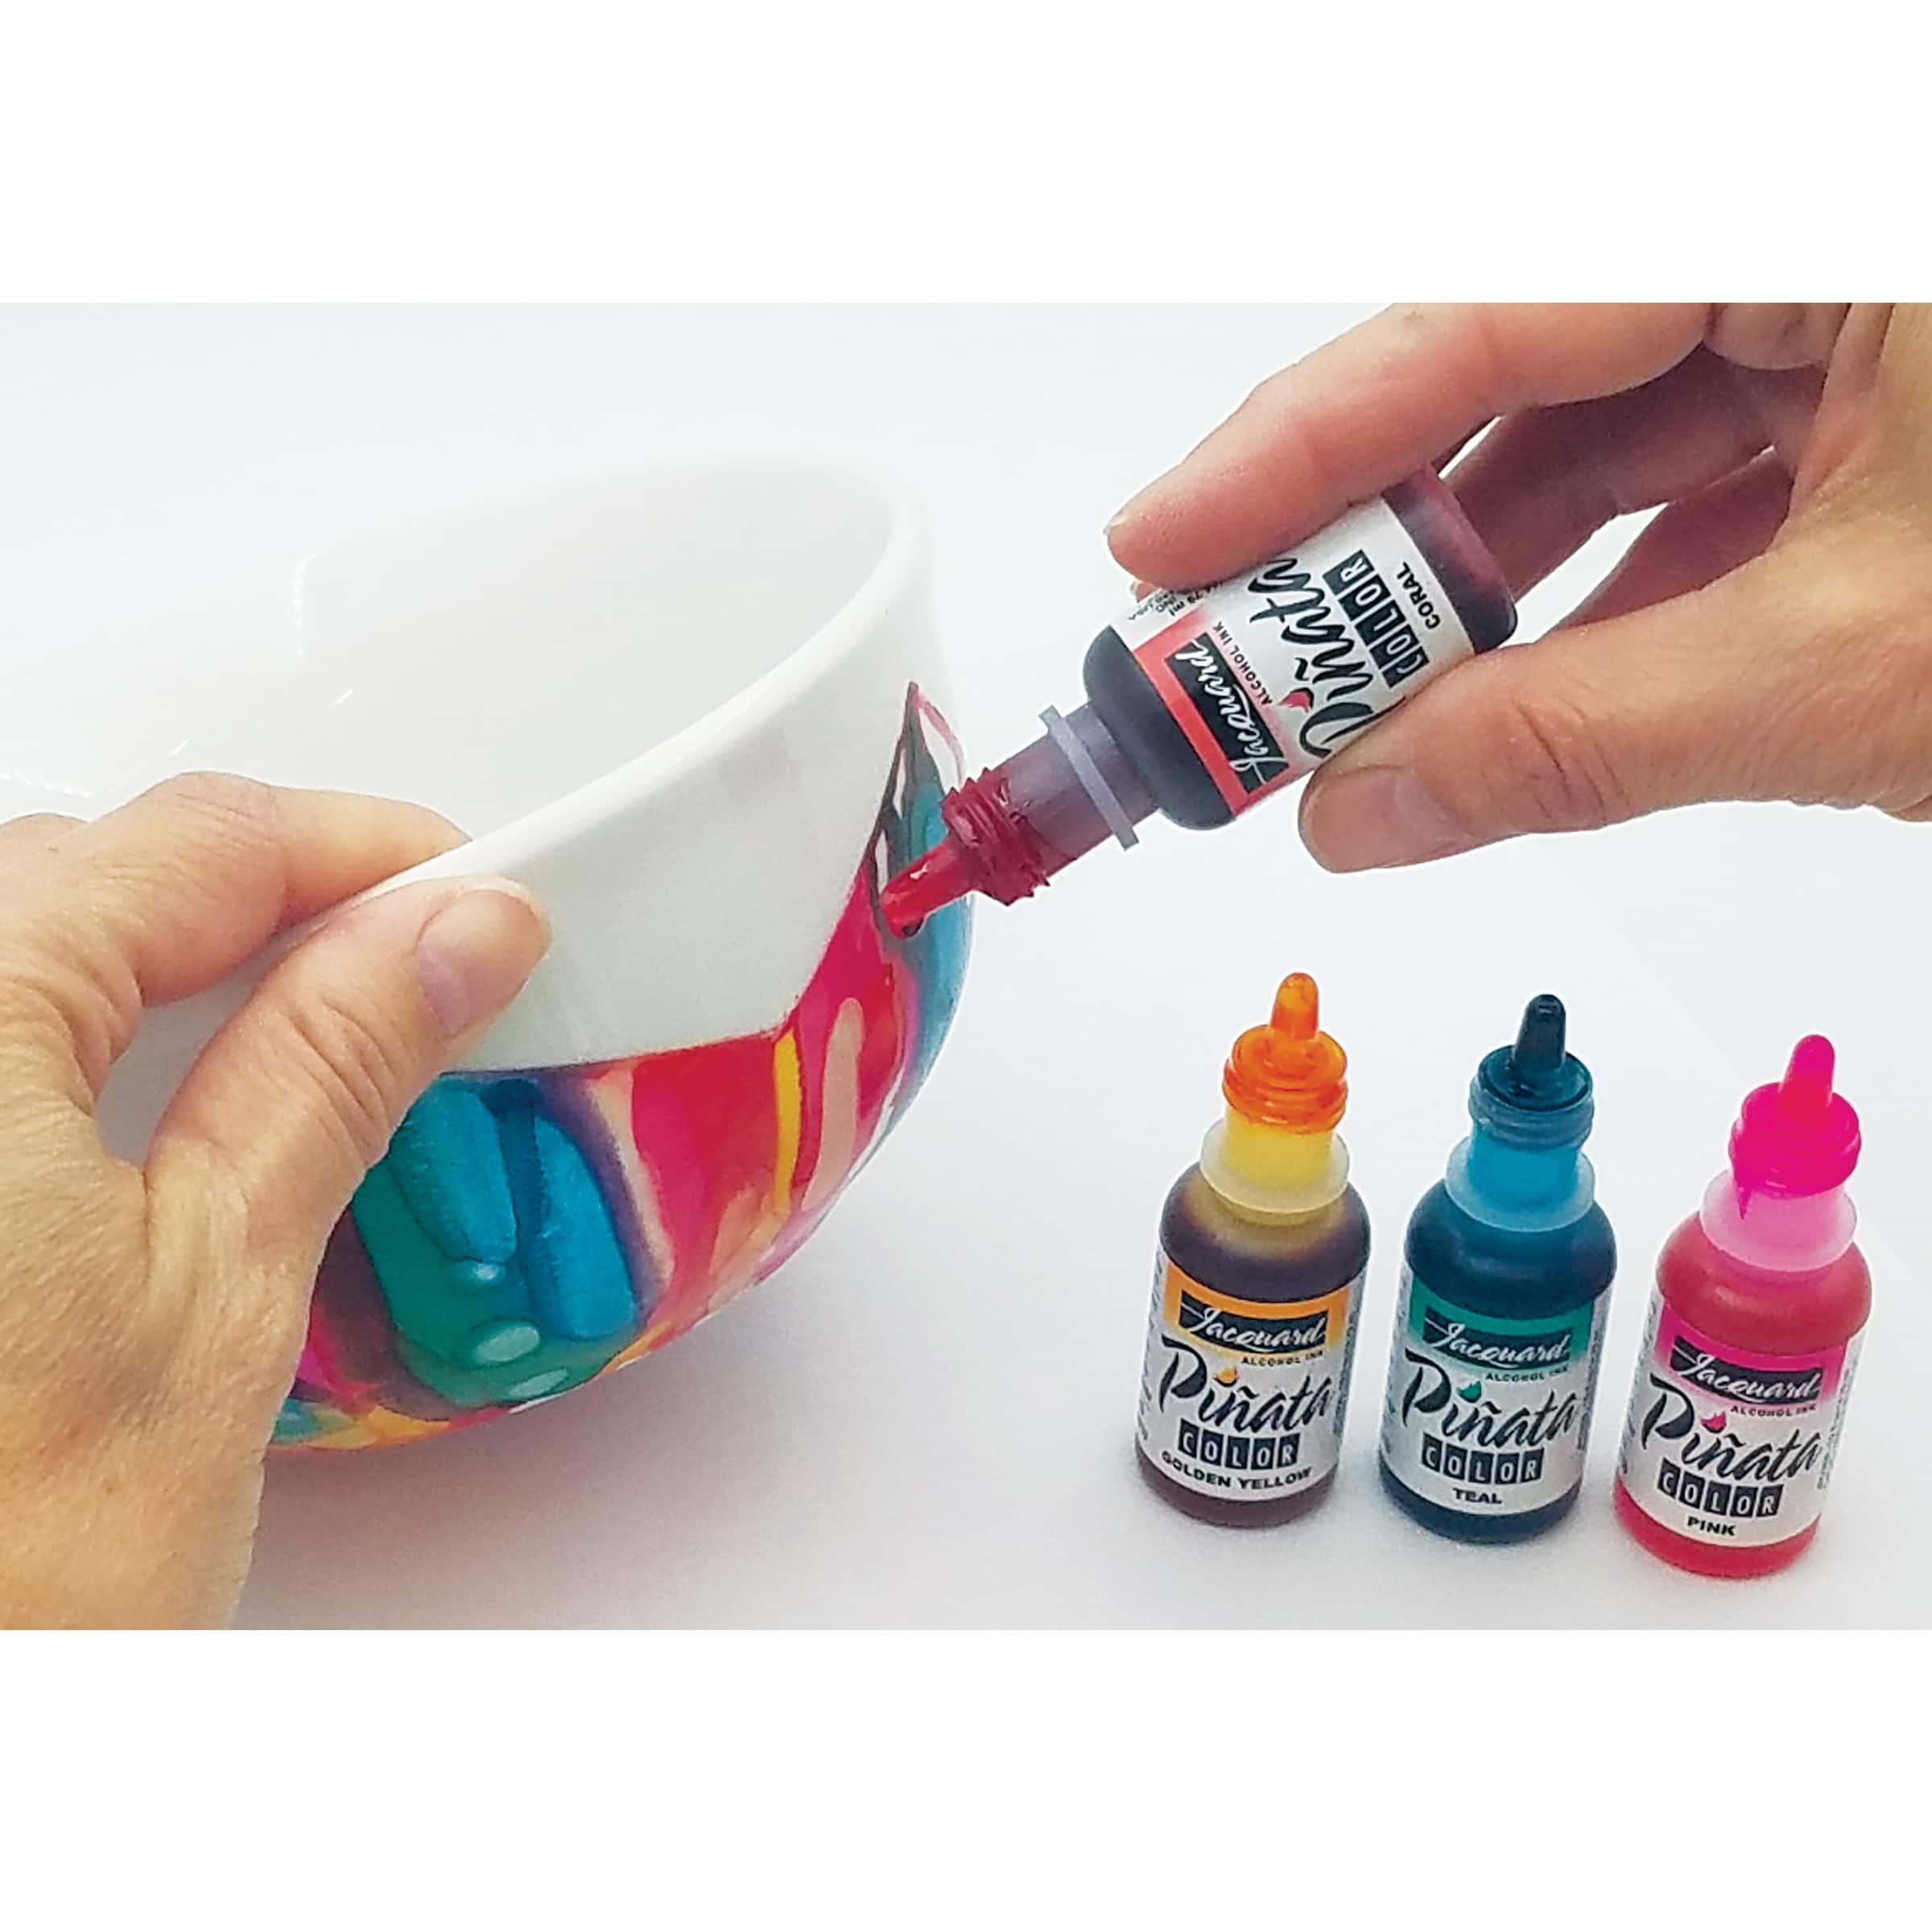 Jacquard Pinata Color Alcohol Ink .5oz – Dubai's Arts And Crafts  Scrapbooking Paper Crafting Cricut